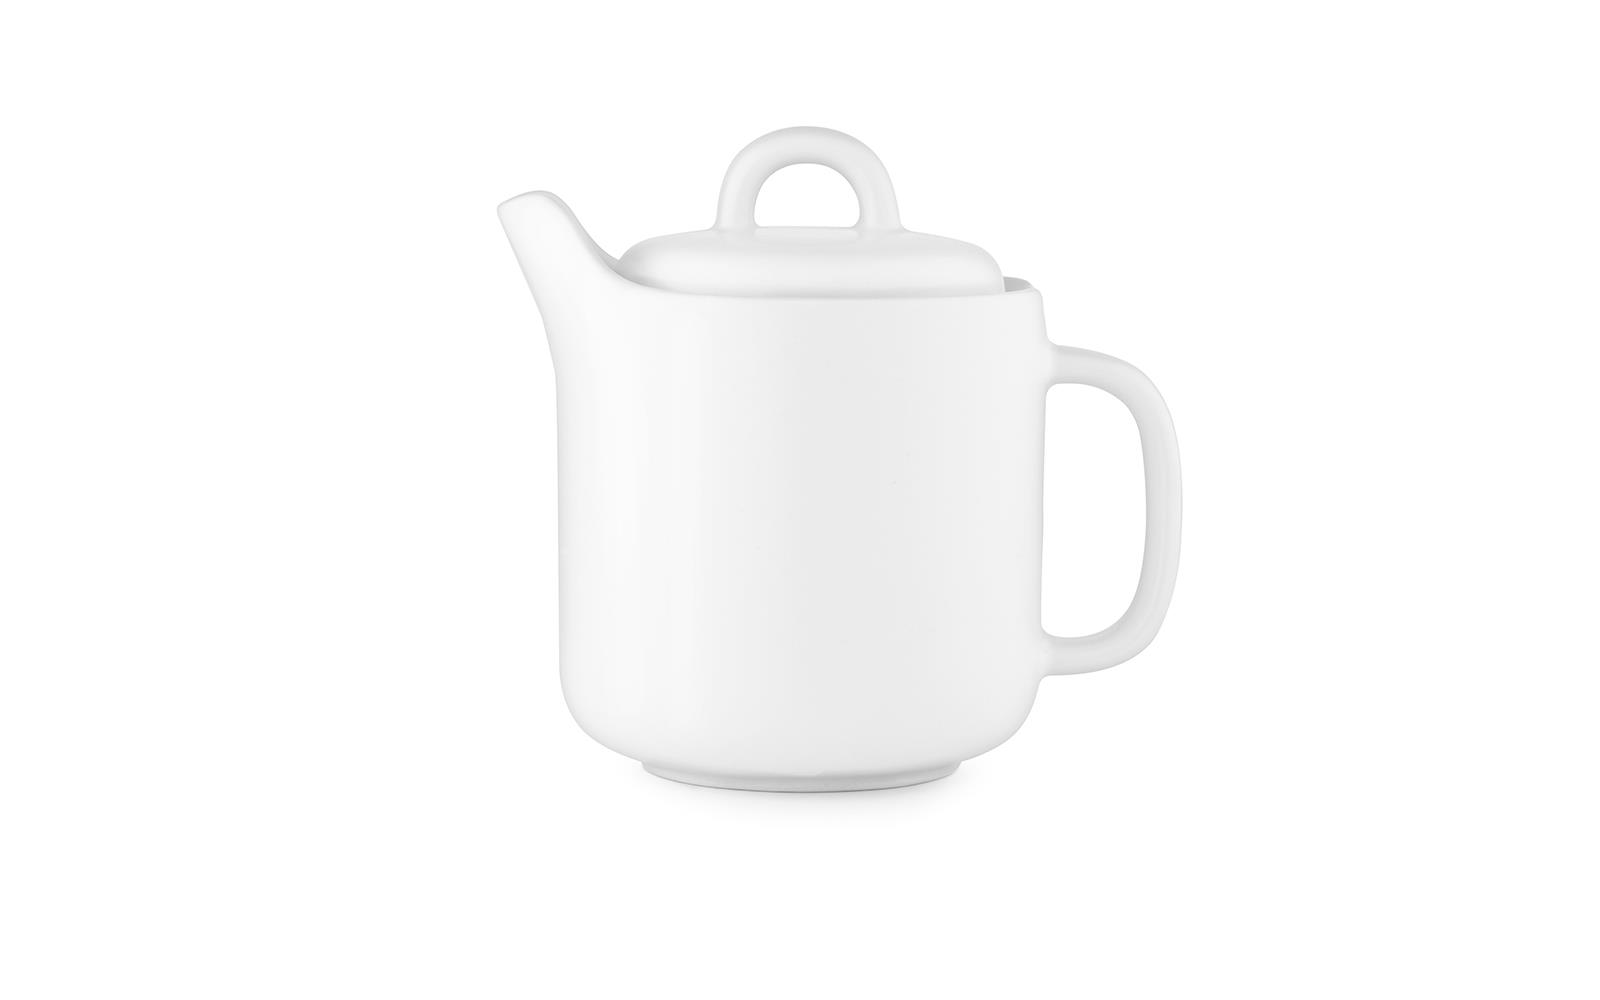 Заварочный чайник Bliss Teapot 70 cl. White Normann Copenhagen ДАНИЯ